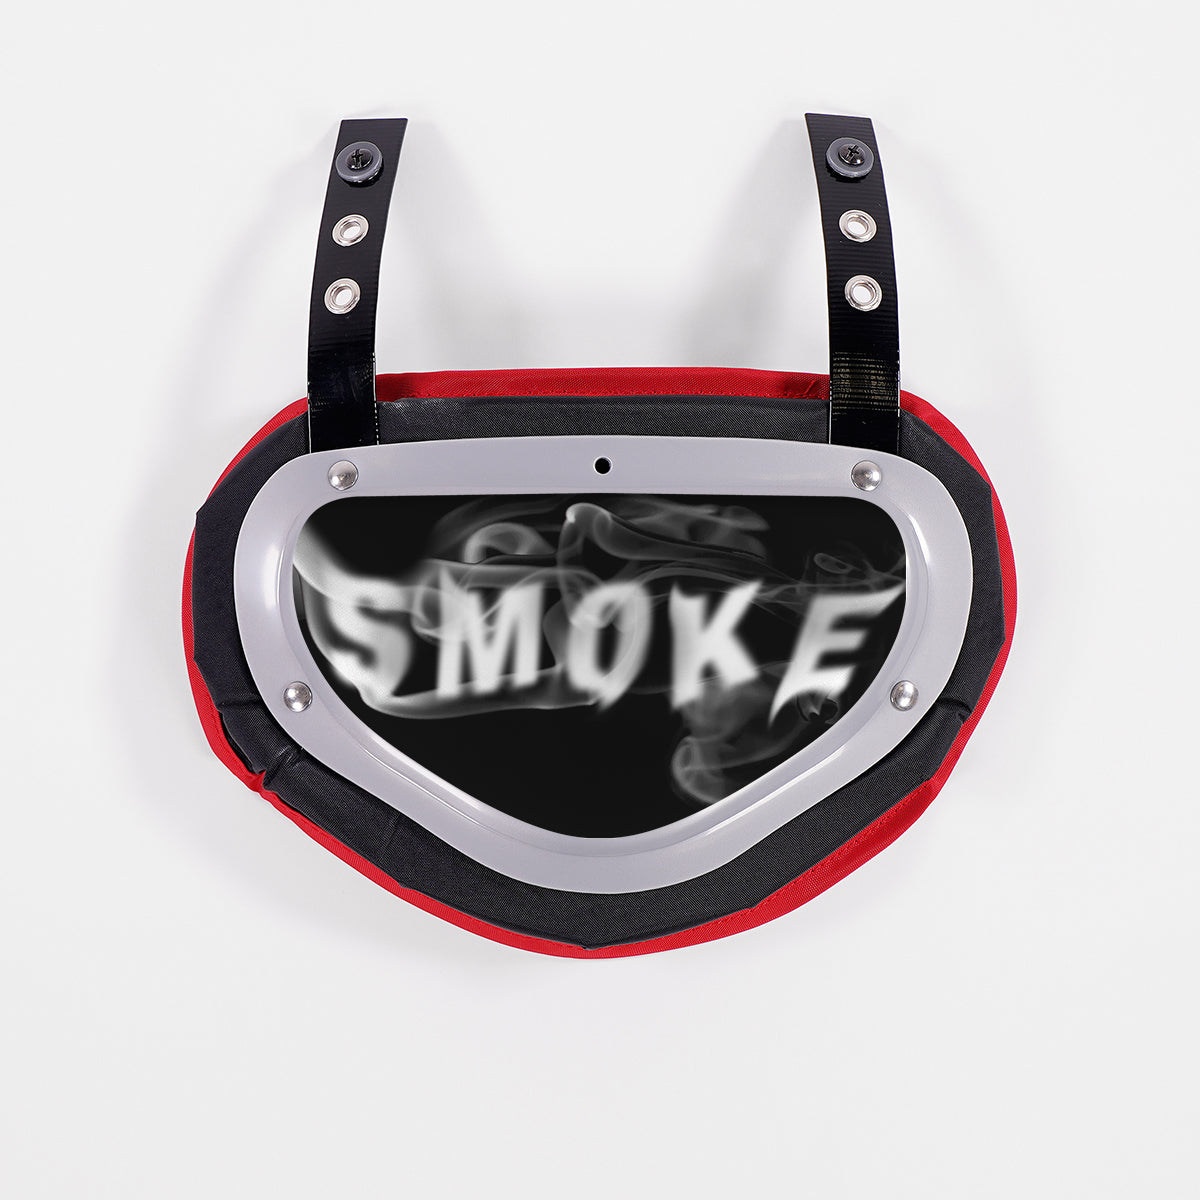 Smoke Sticker for Back Plate